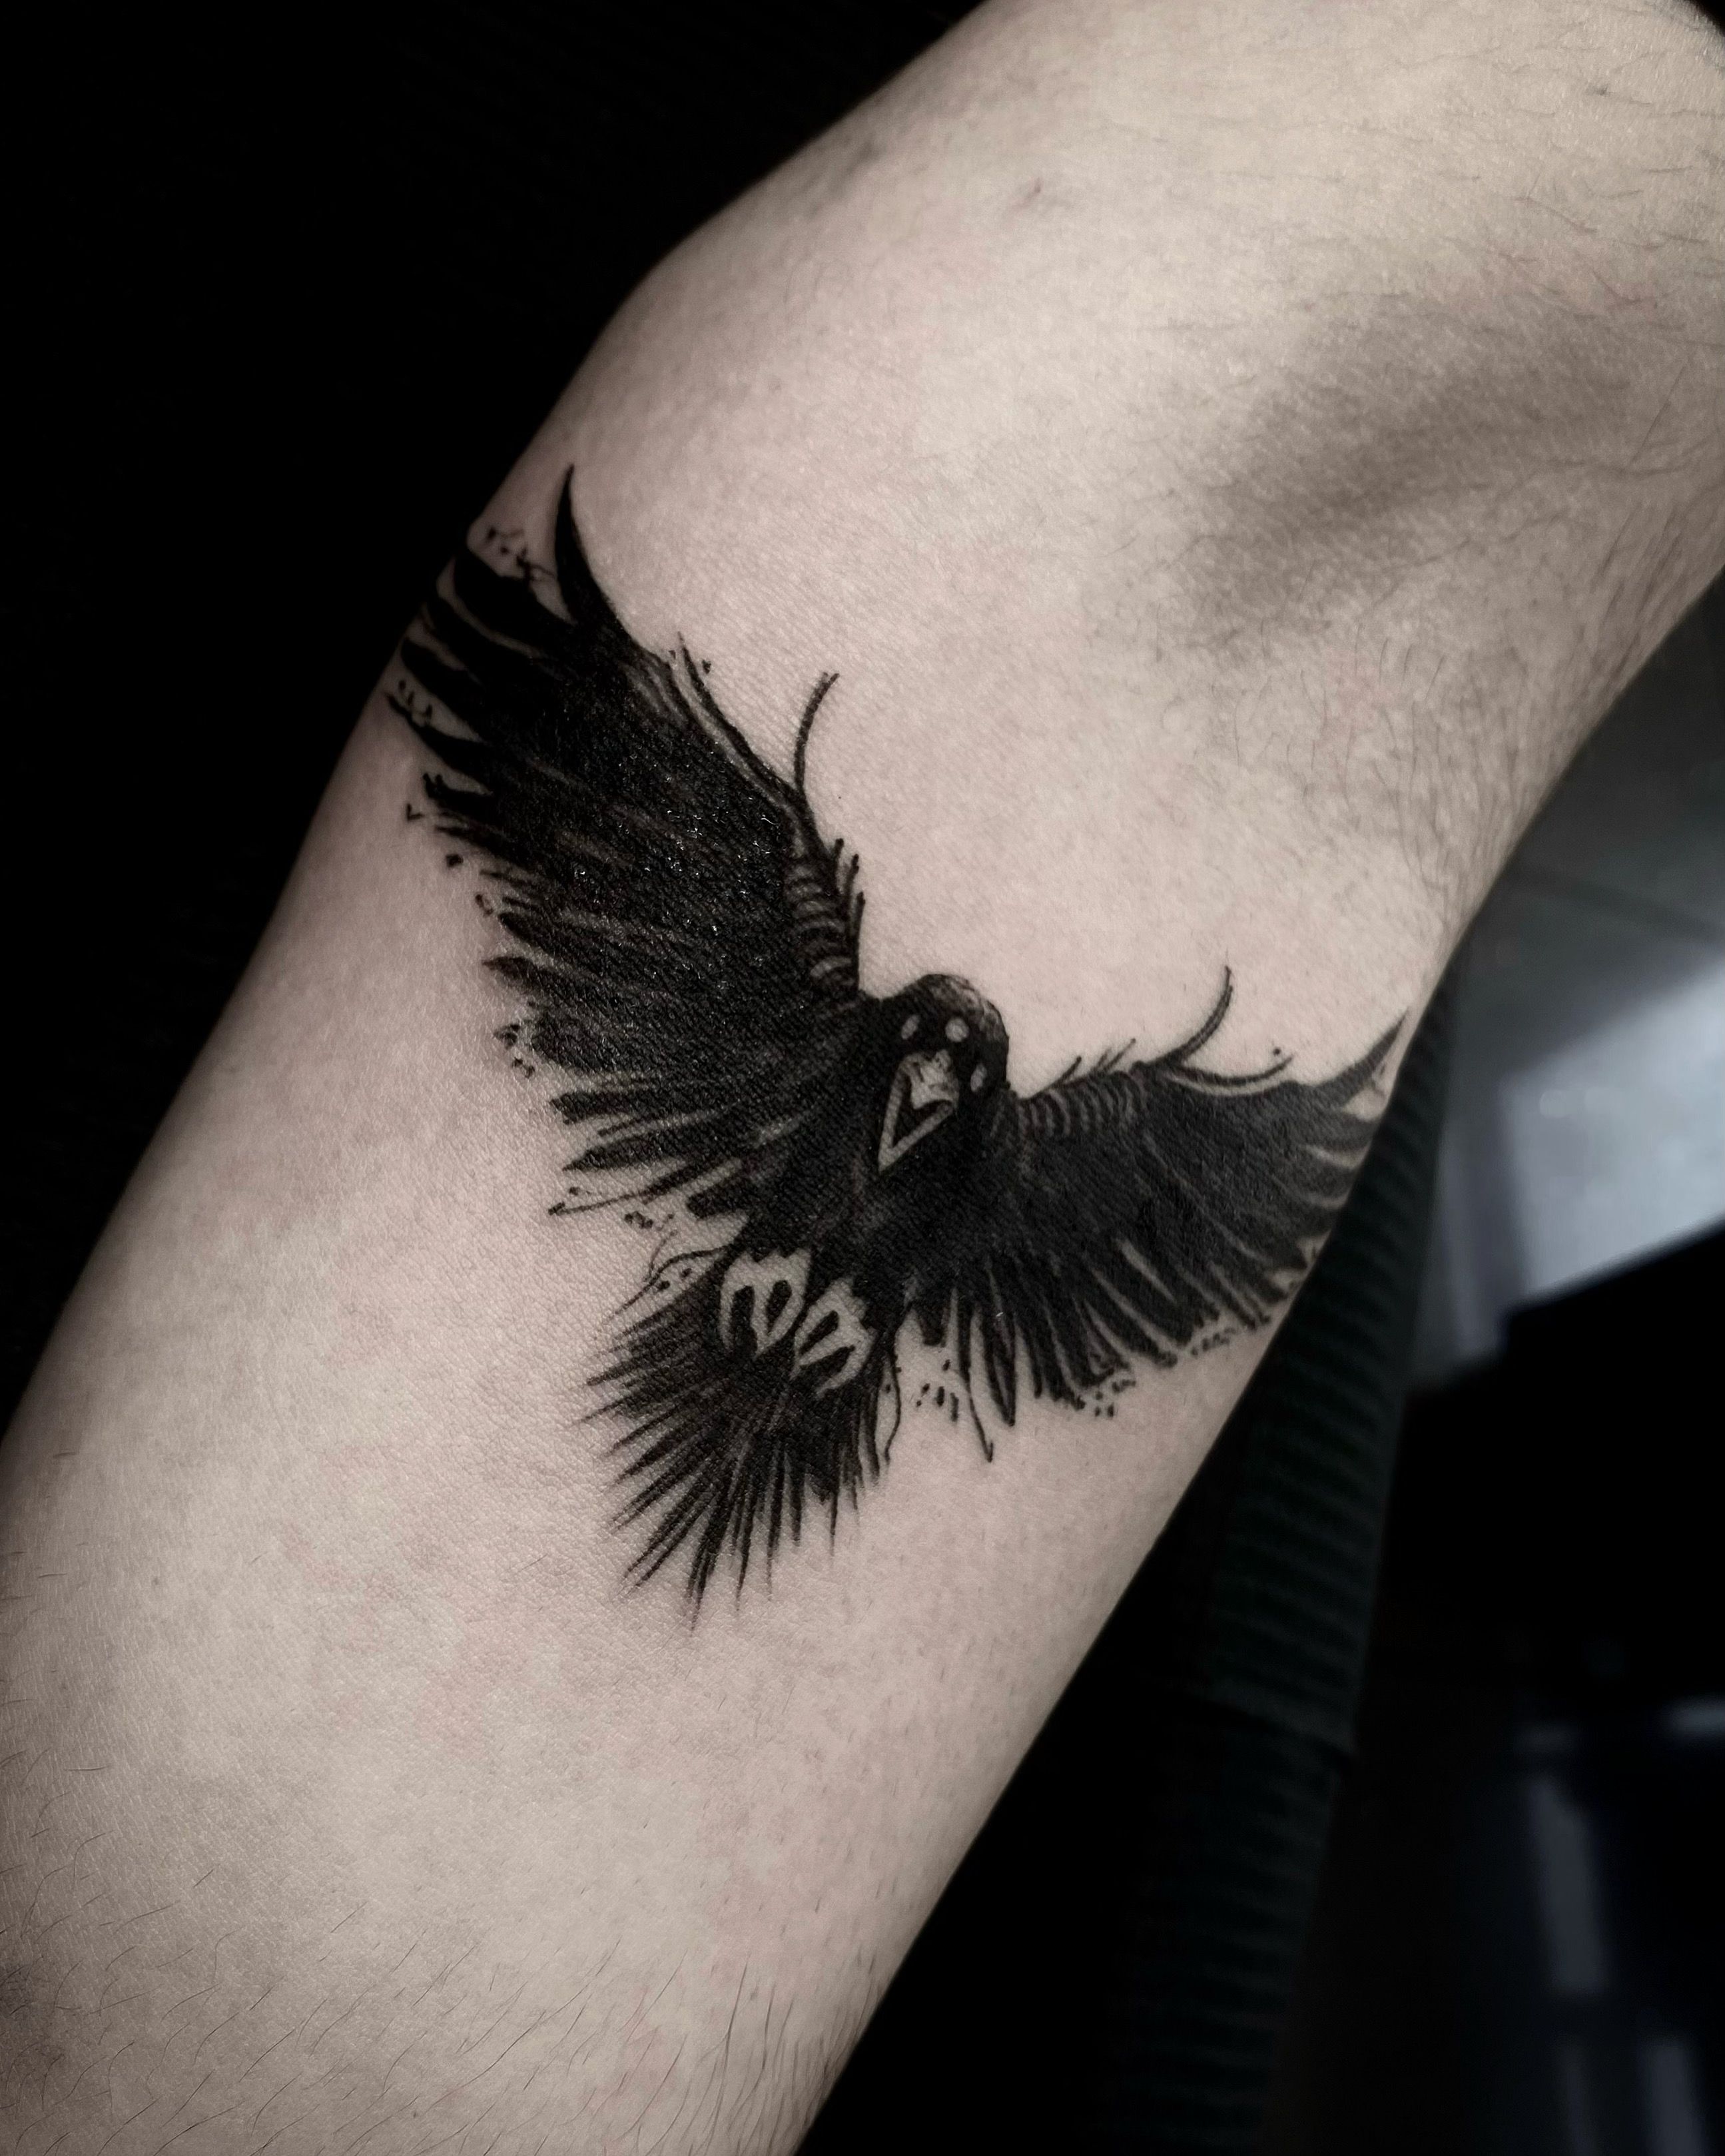 Little Crow Tattoo Behind Ear - Best Tattoo Ideas Gallery